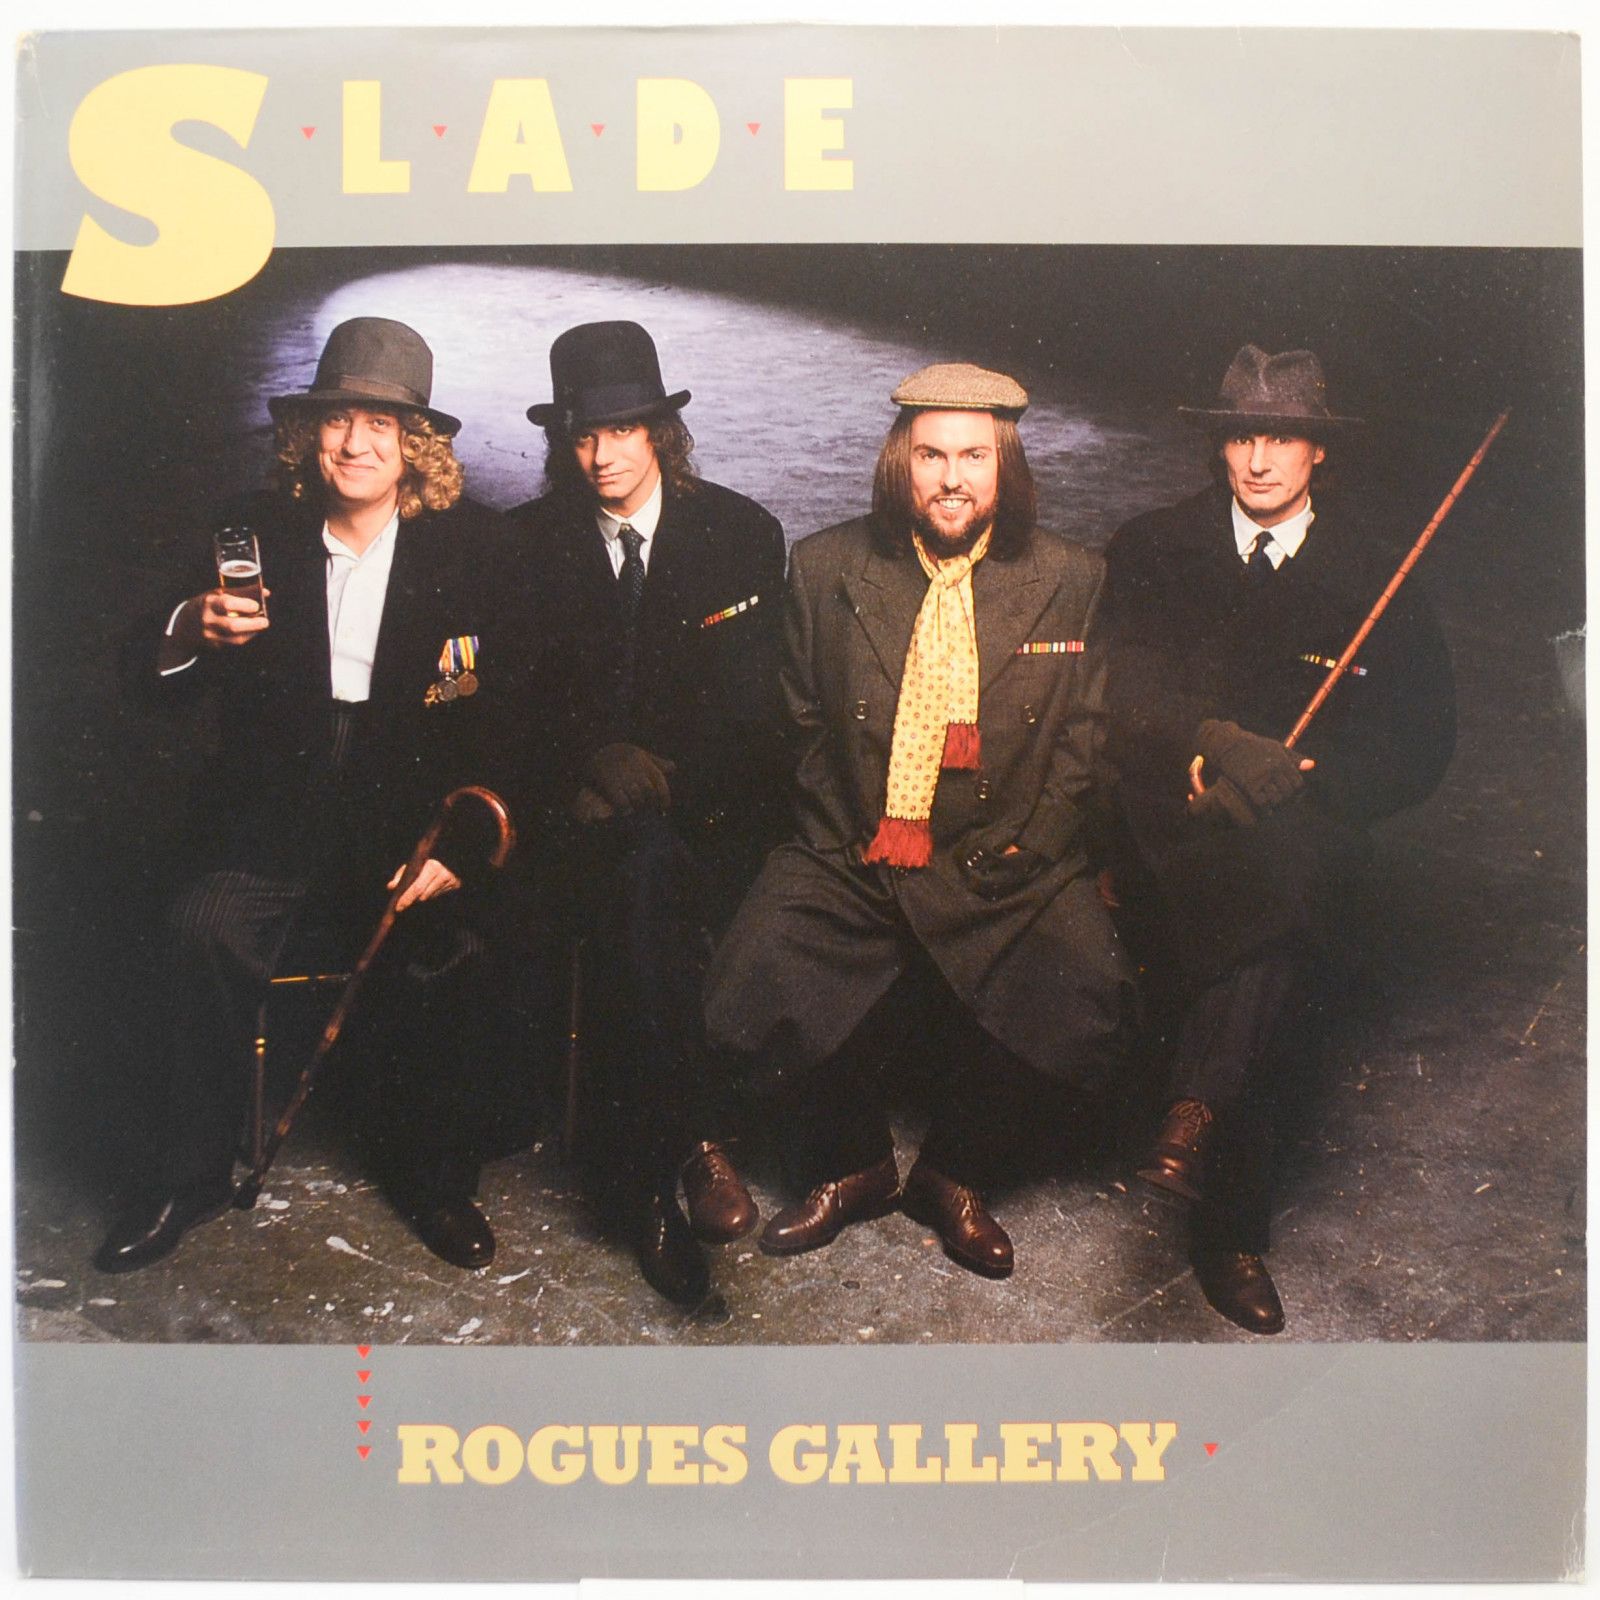 Slade — Rogues Gallery, 1985